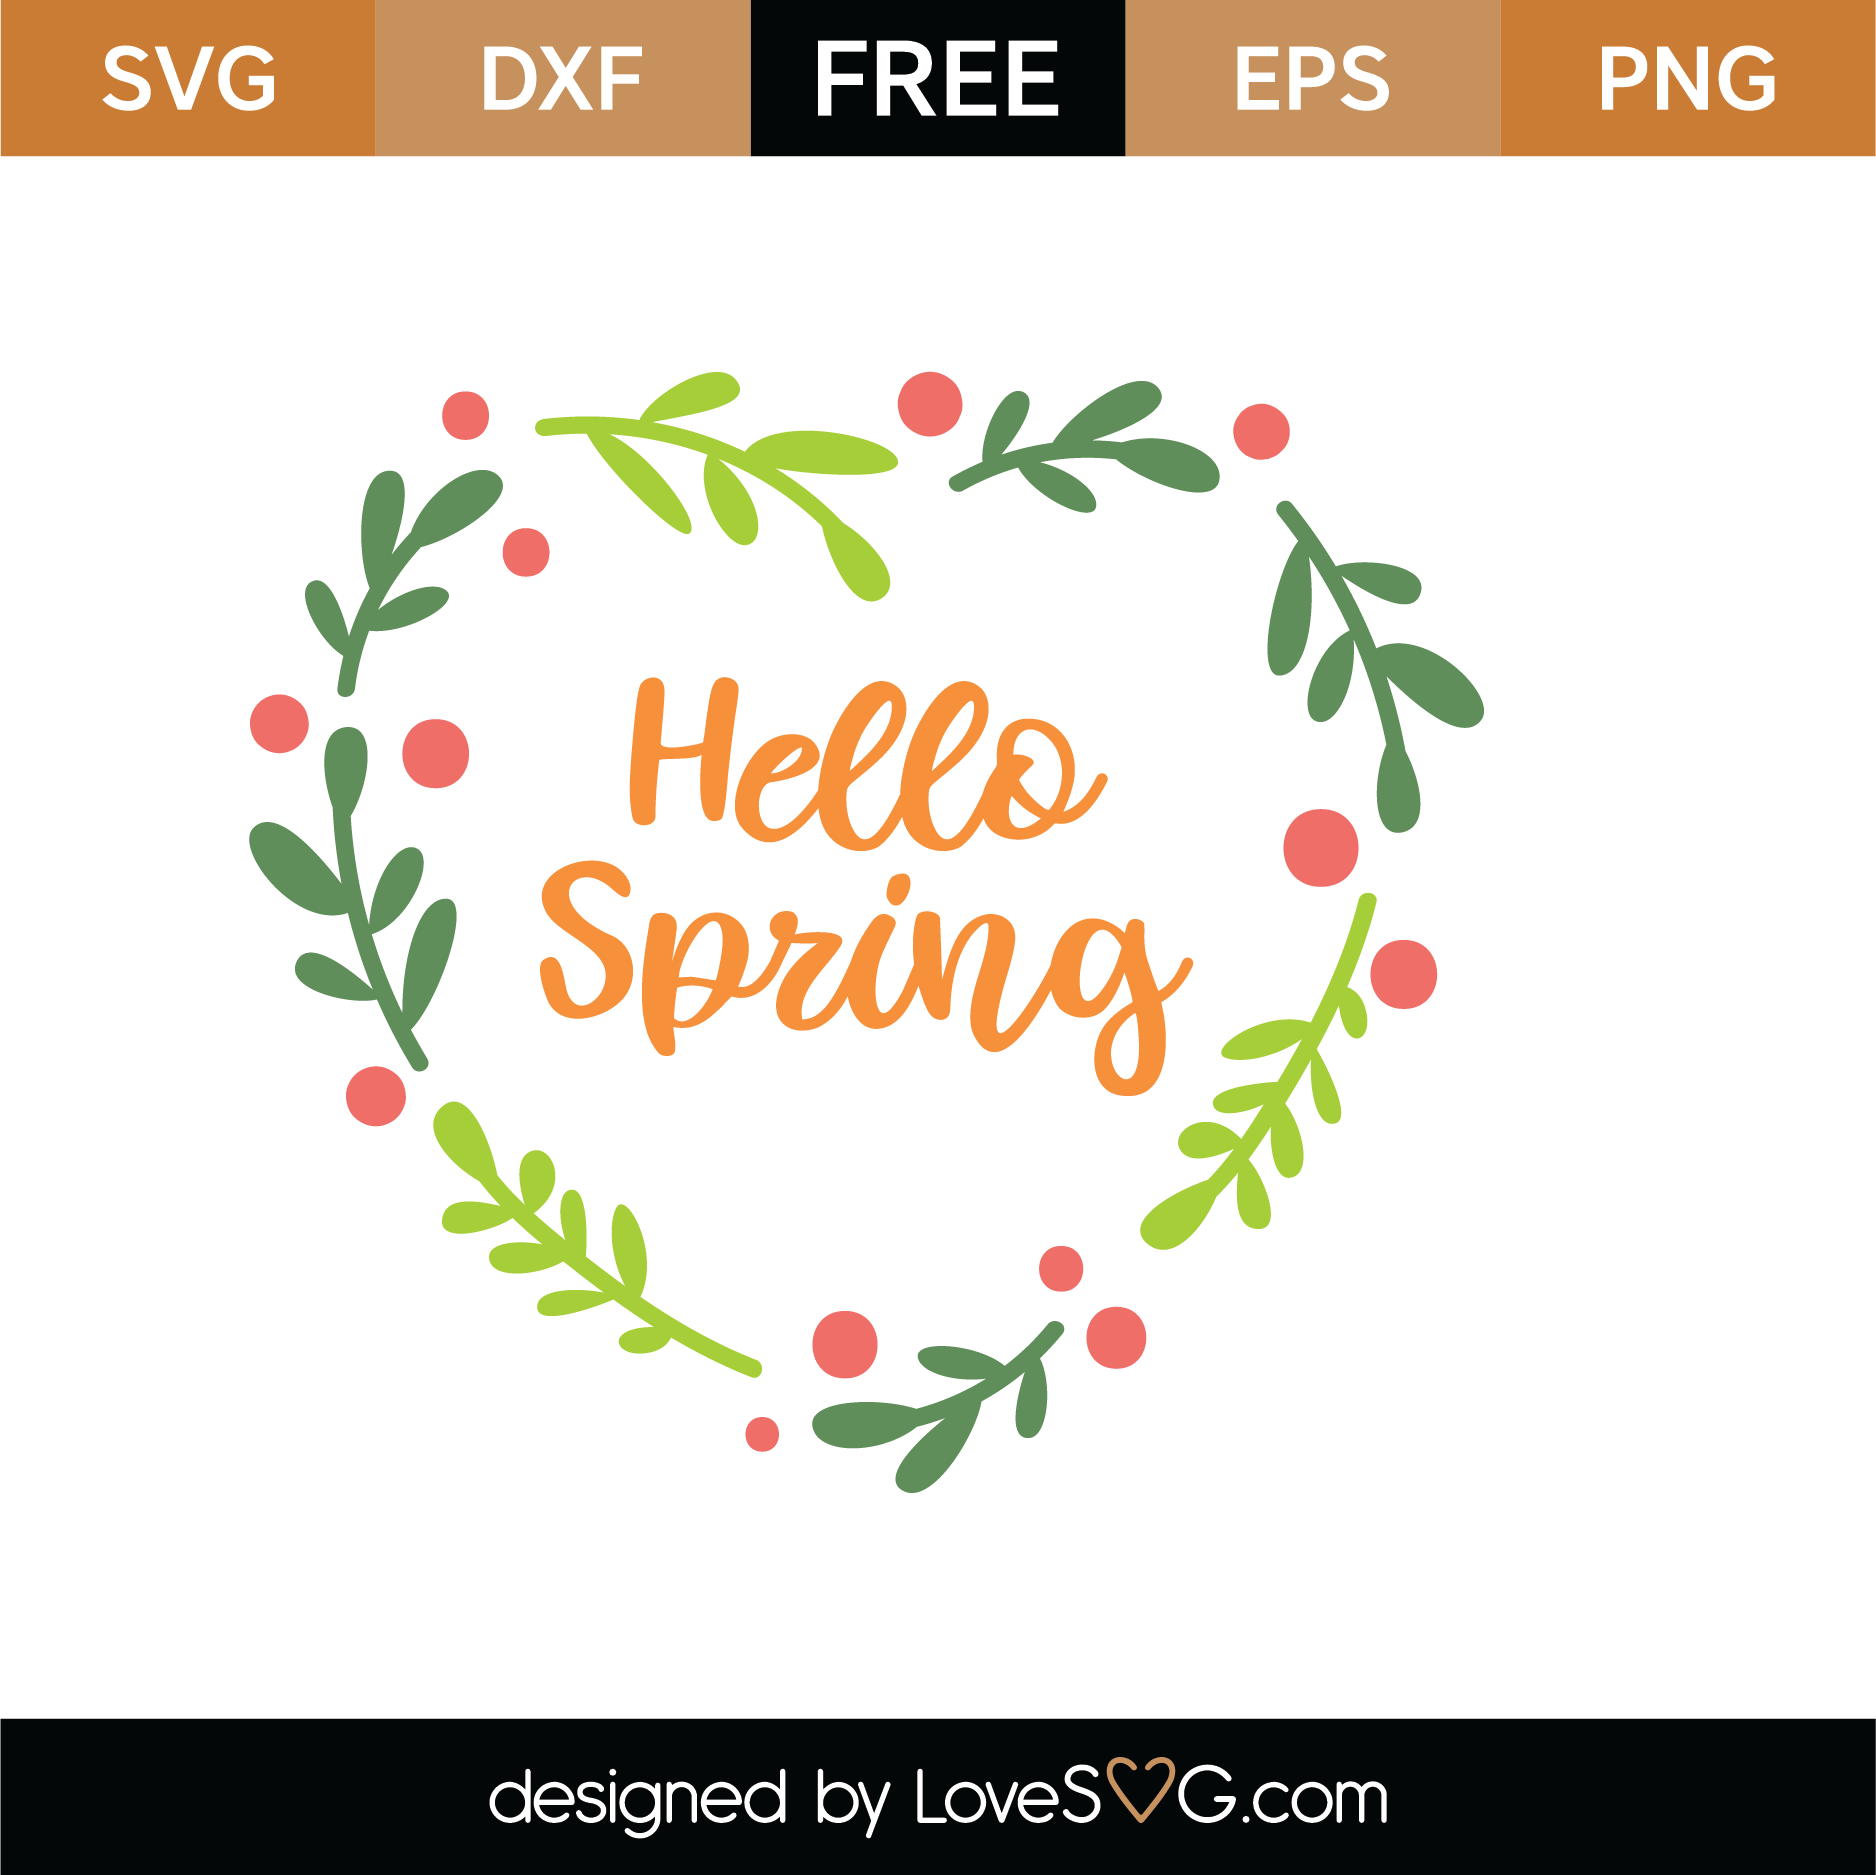 Download Free Hello Spring SVG Cut File | Lovesvg.com